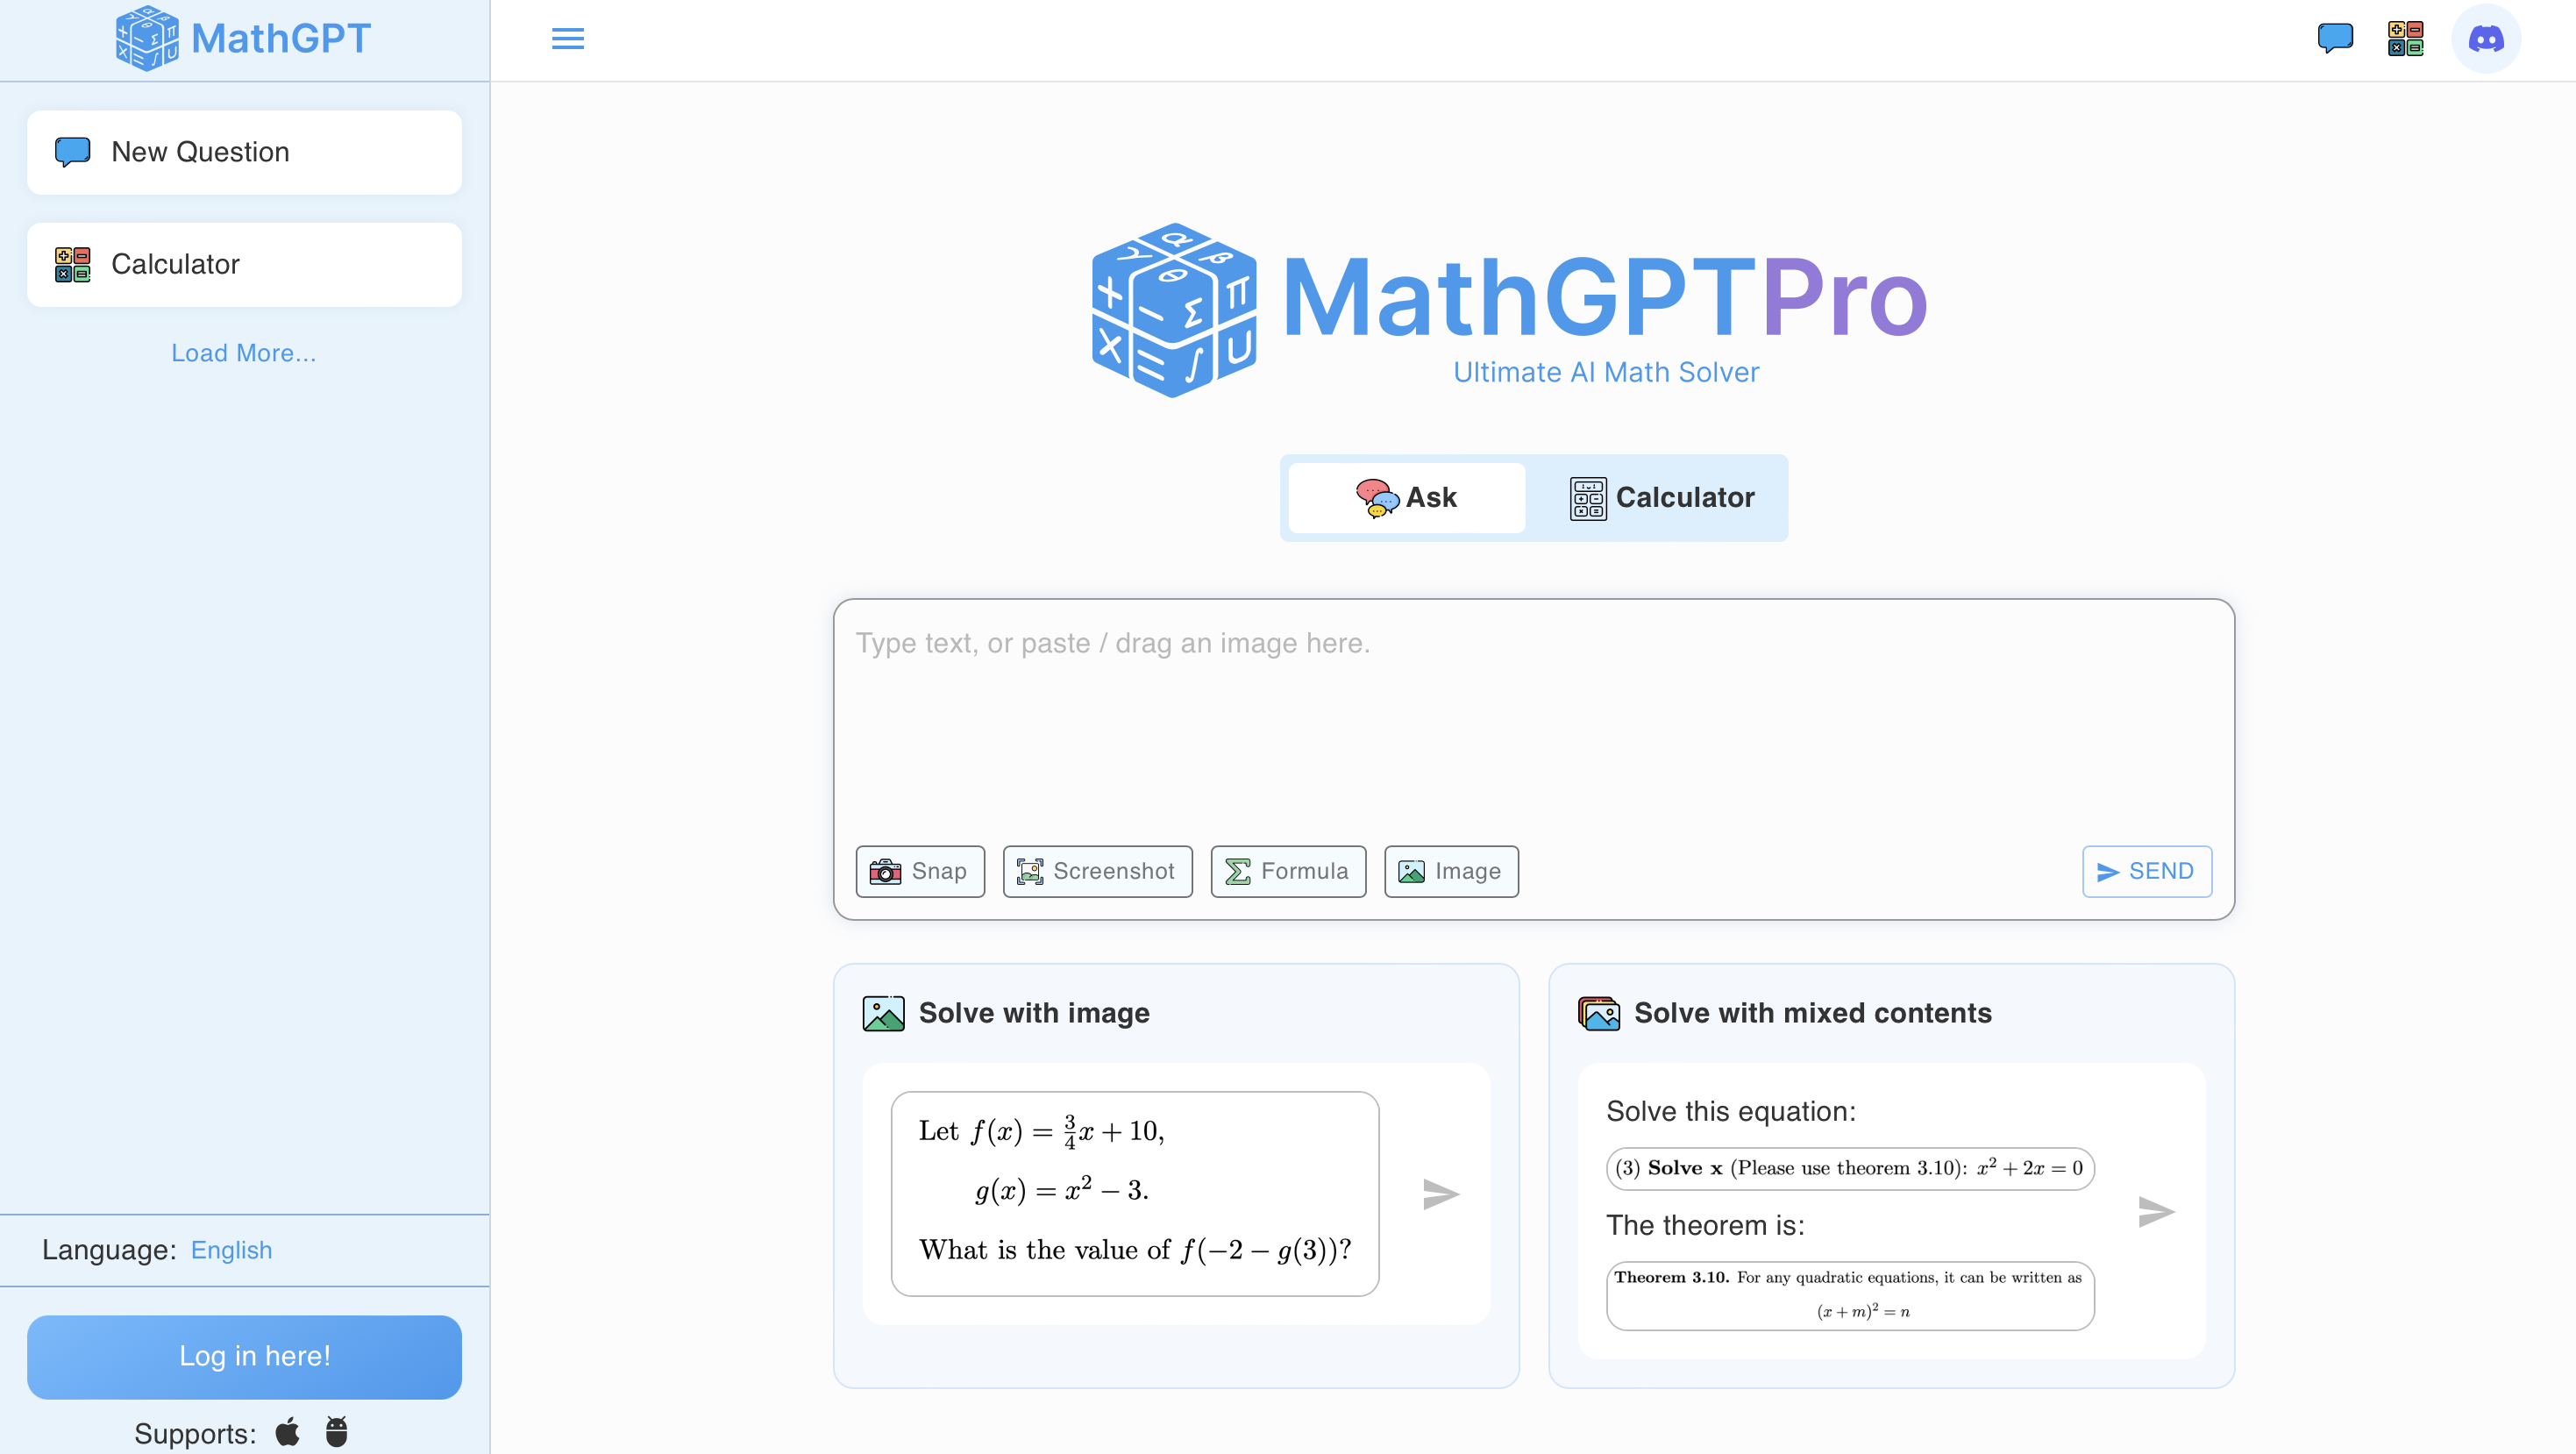 MathGPT Pro